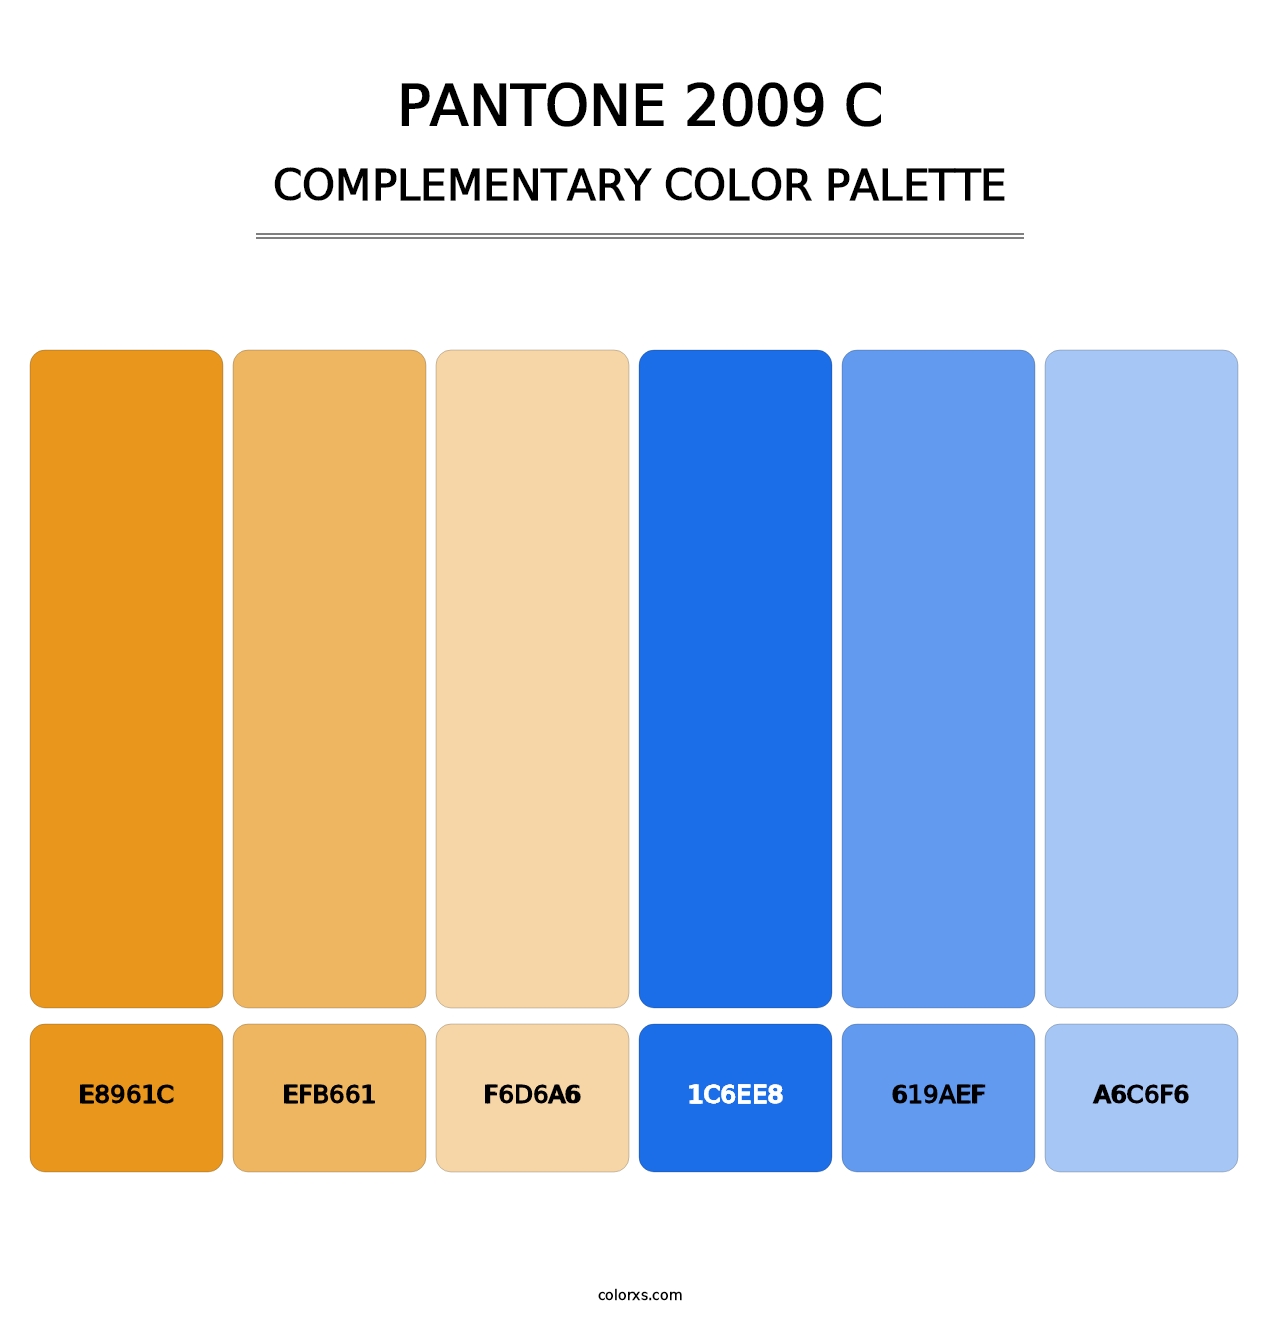 PANTONE 2009 C - Complementary Color Palette